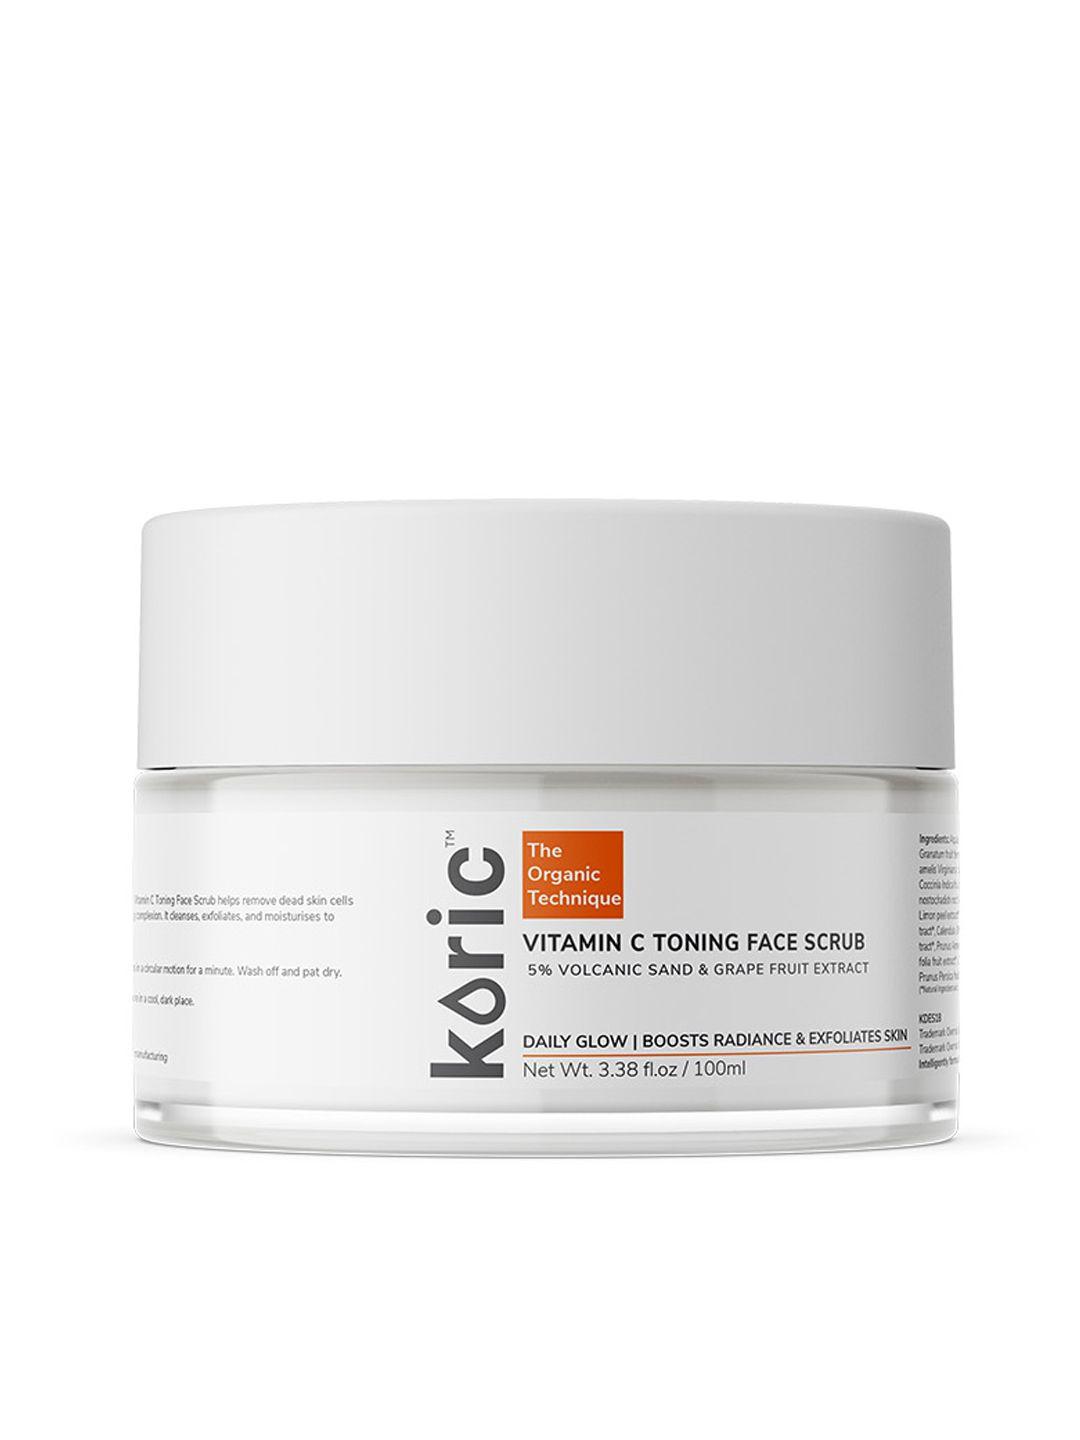 koric vitamin c toning face scrub with 5% volcanic sand & grapefruit extract 100 ml